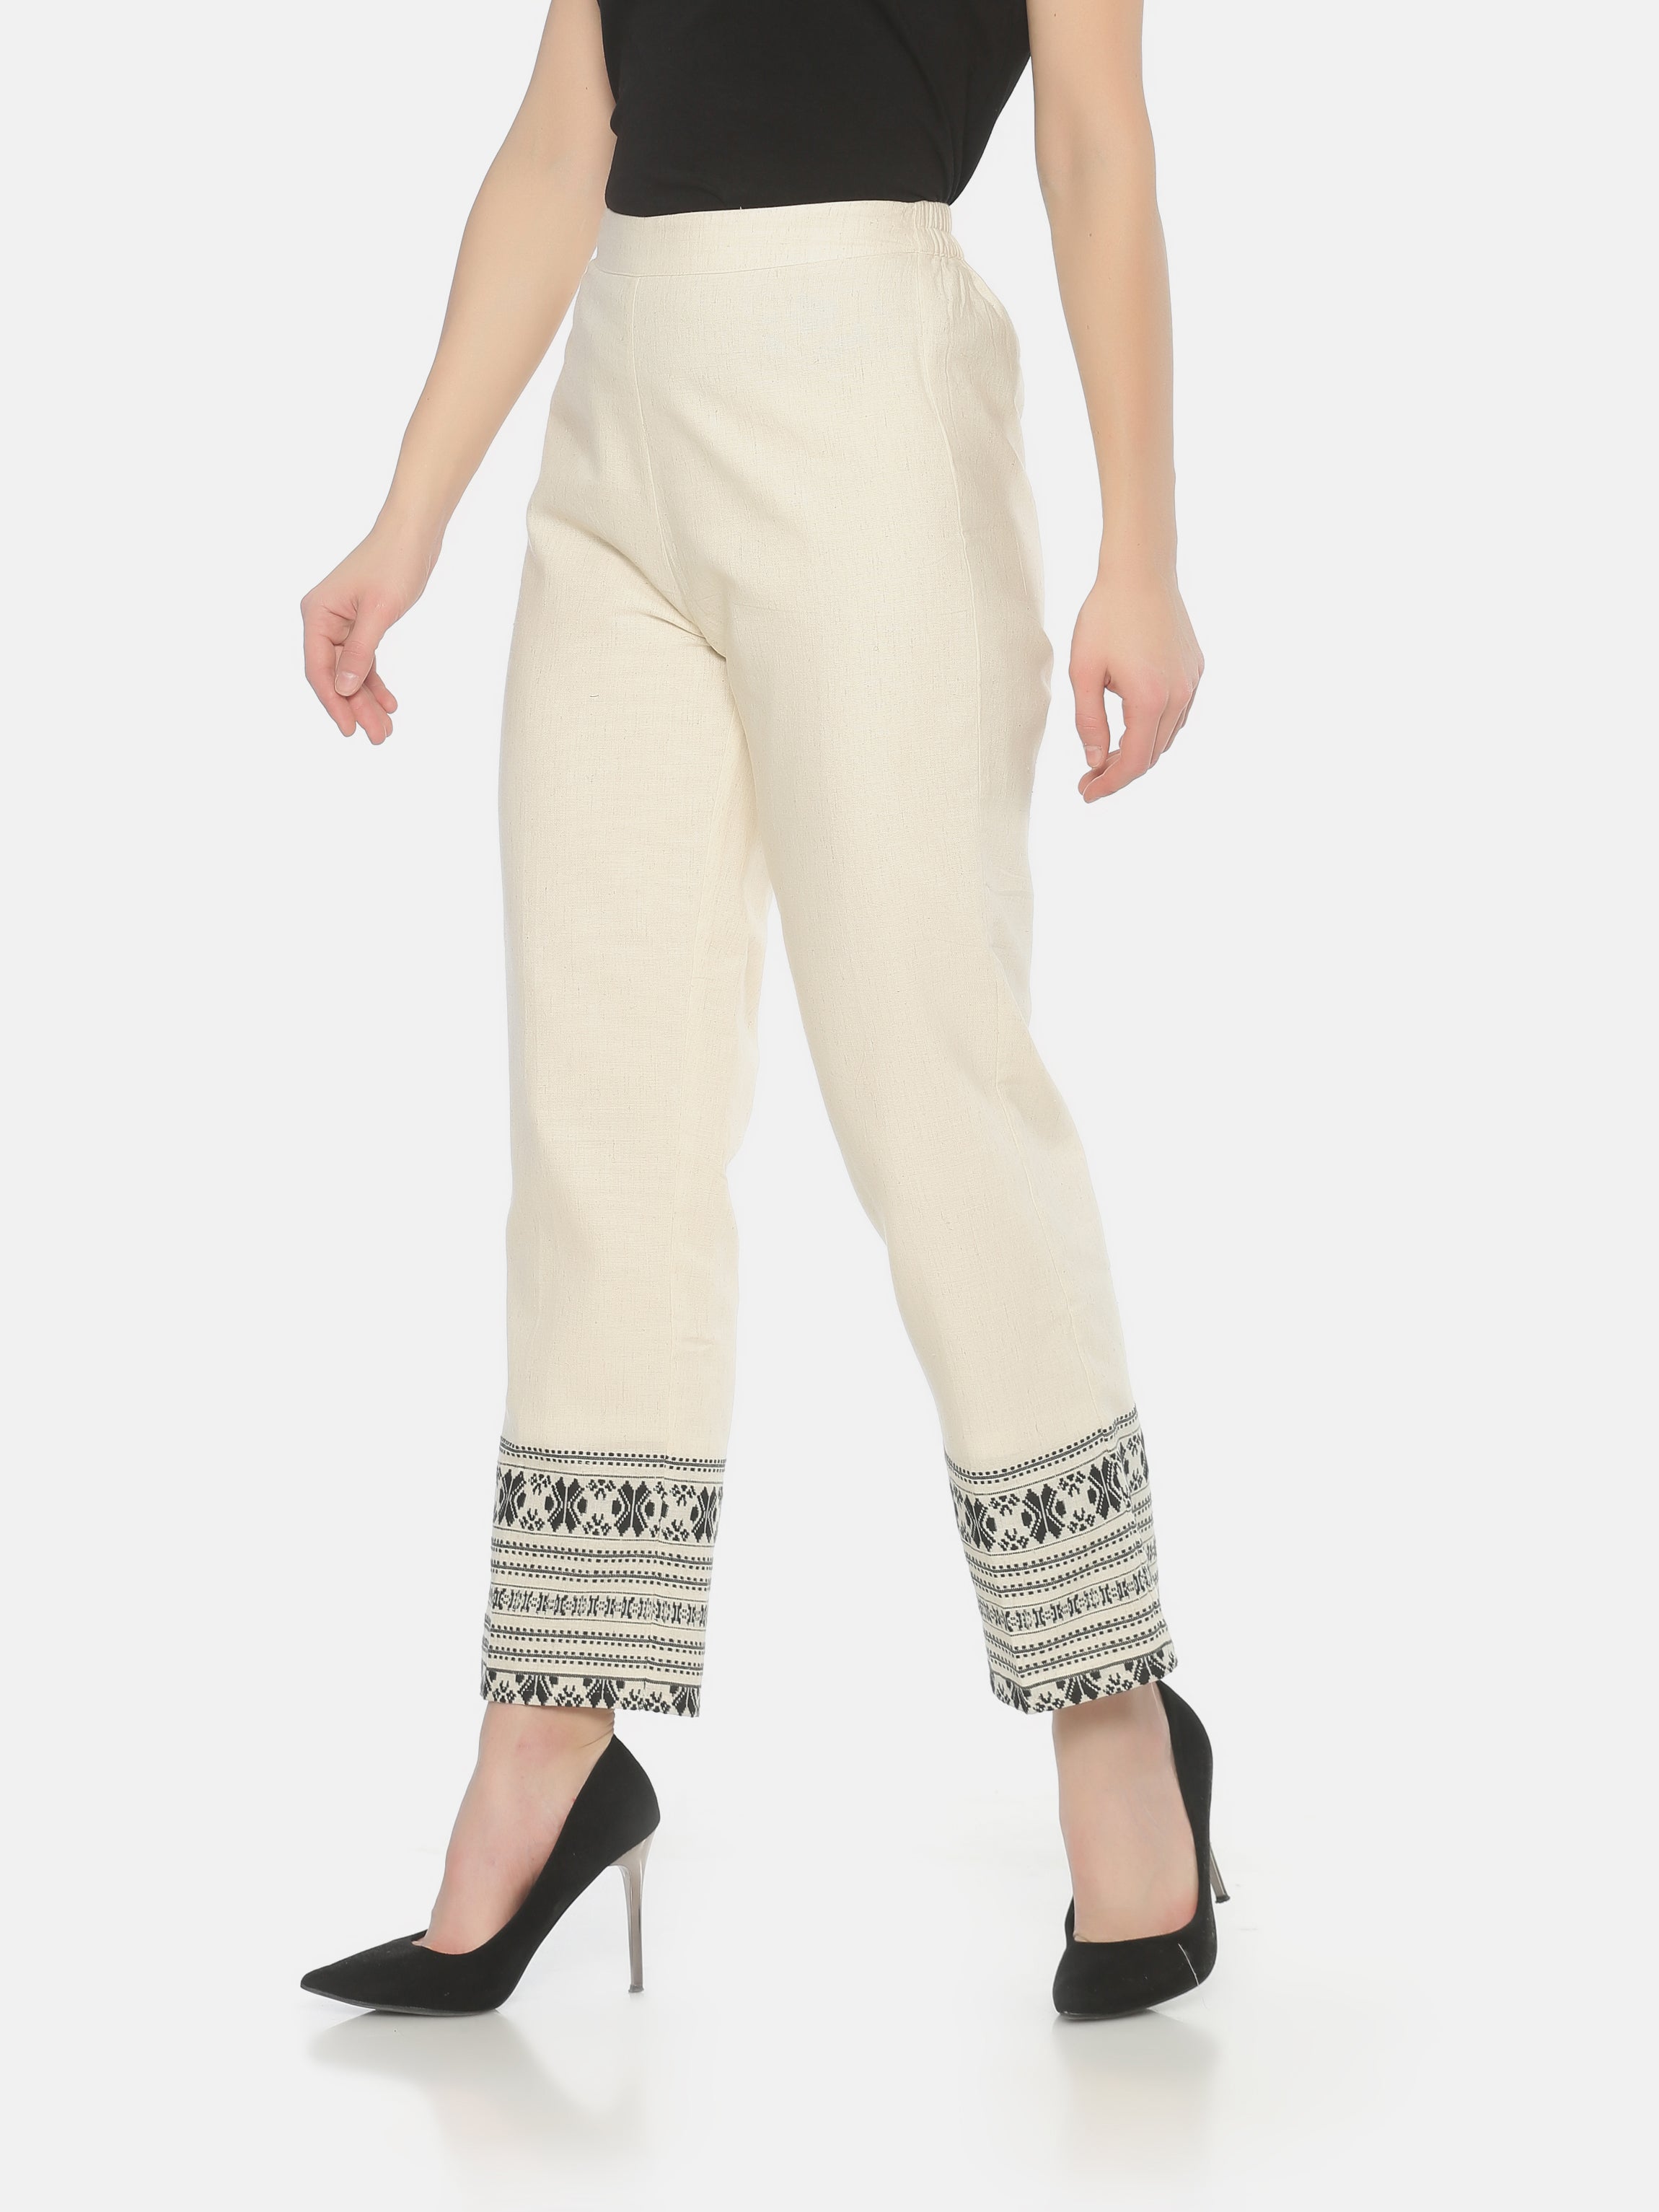 Buy Black Pants for Women by NEHAMTA Online | Ajio.com